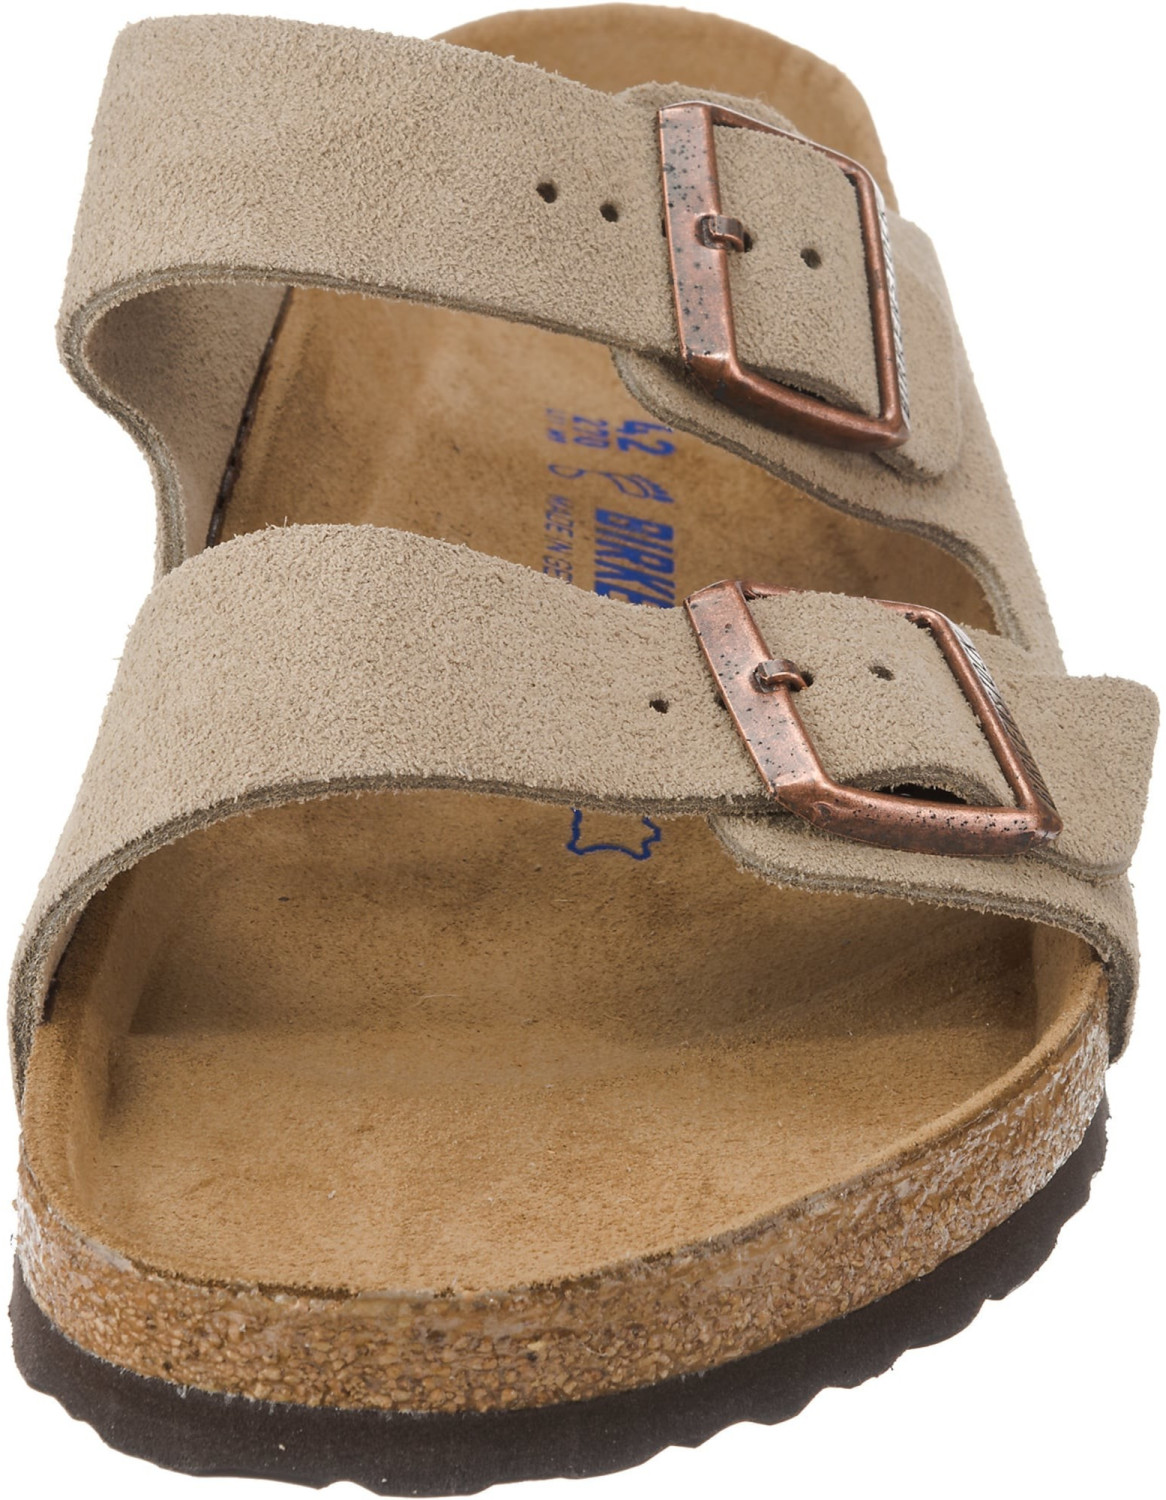 Birkenstock Taupe Beige Suede Leather Arizona Sandals